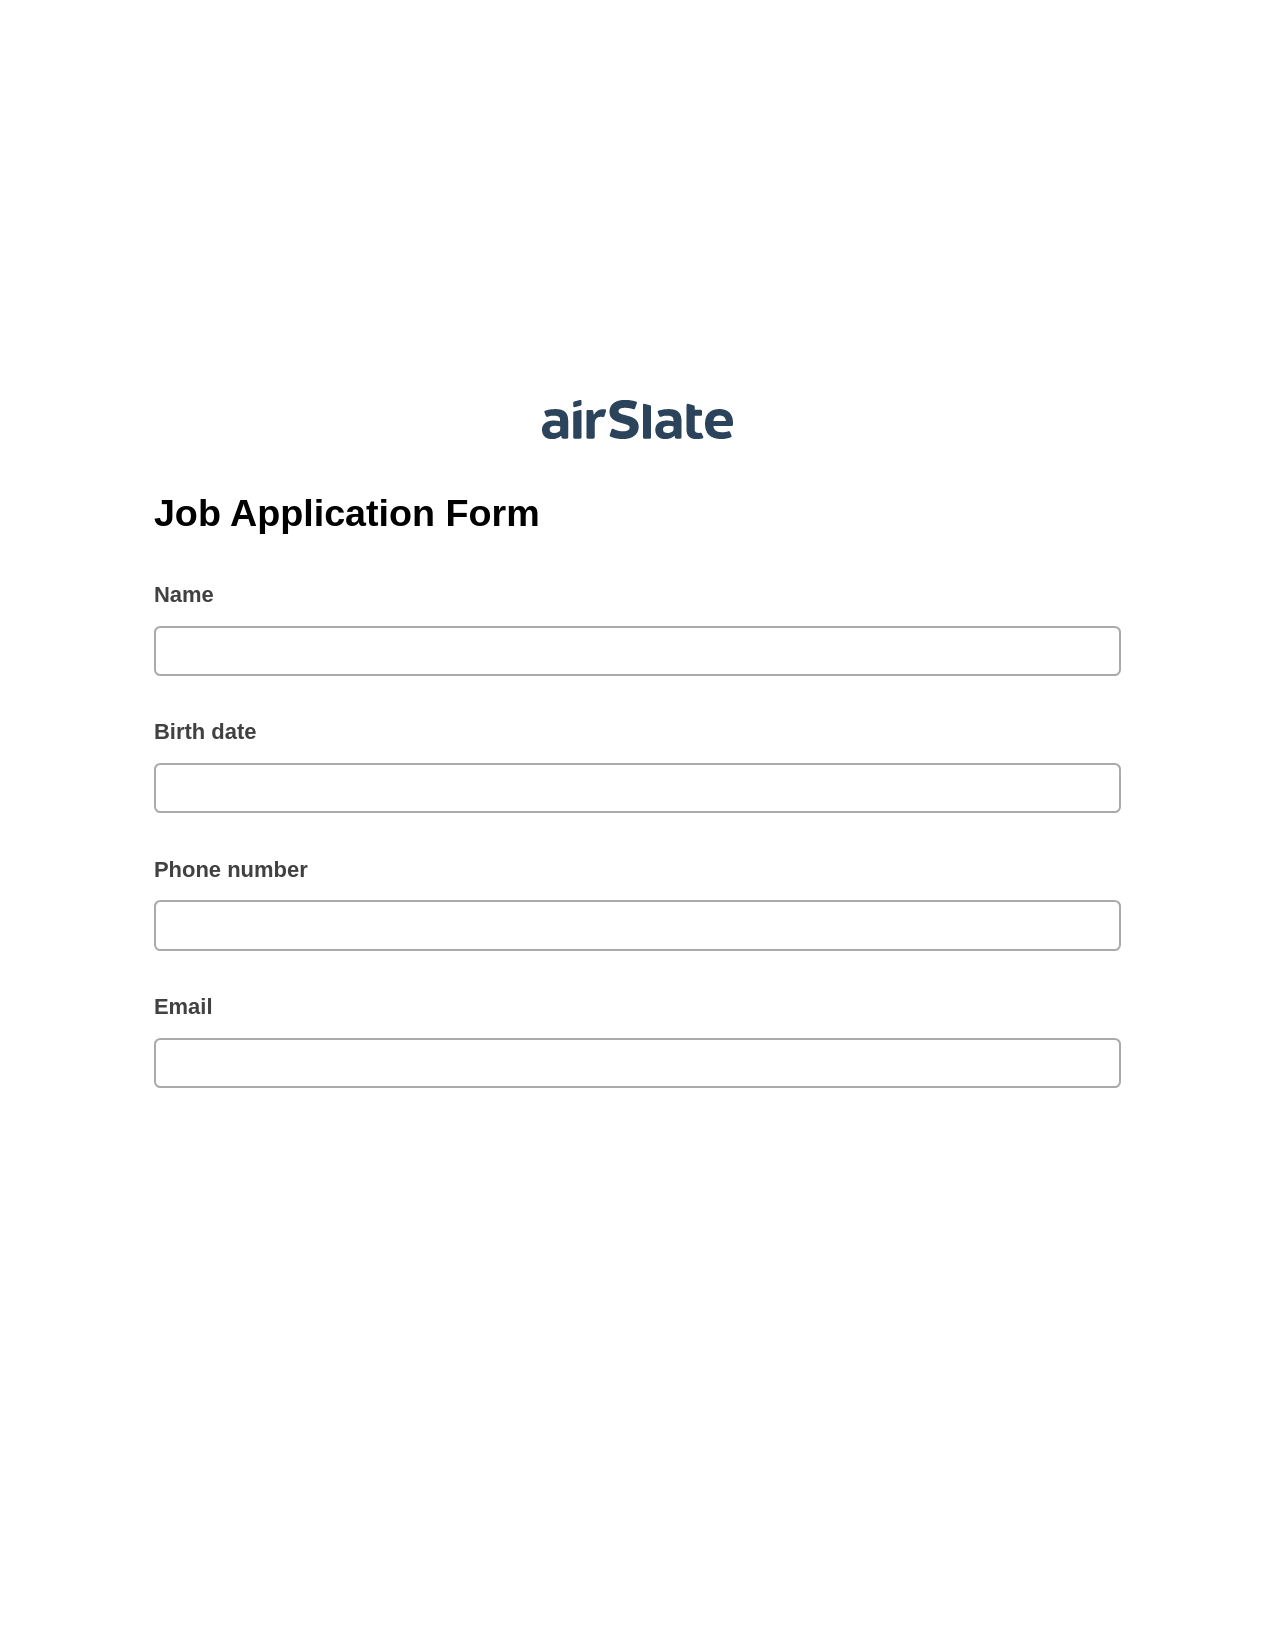 Job Application Form Pre-fill from MySQL Bot, Reminder Bot, Dropbox Bot